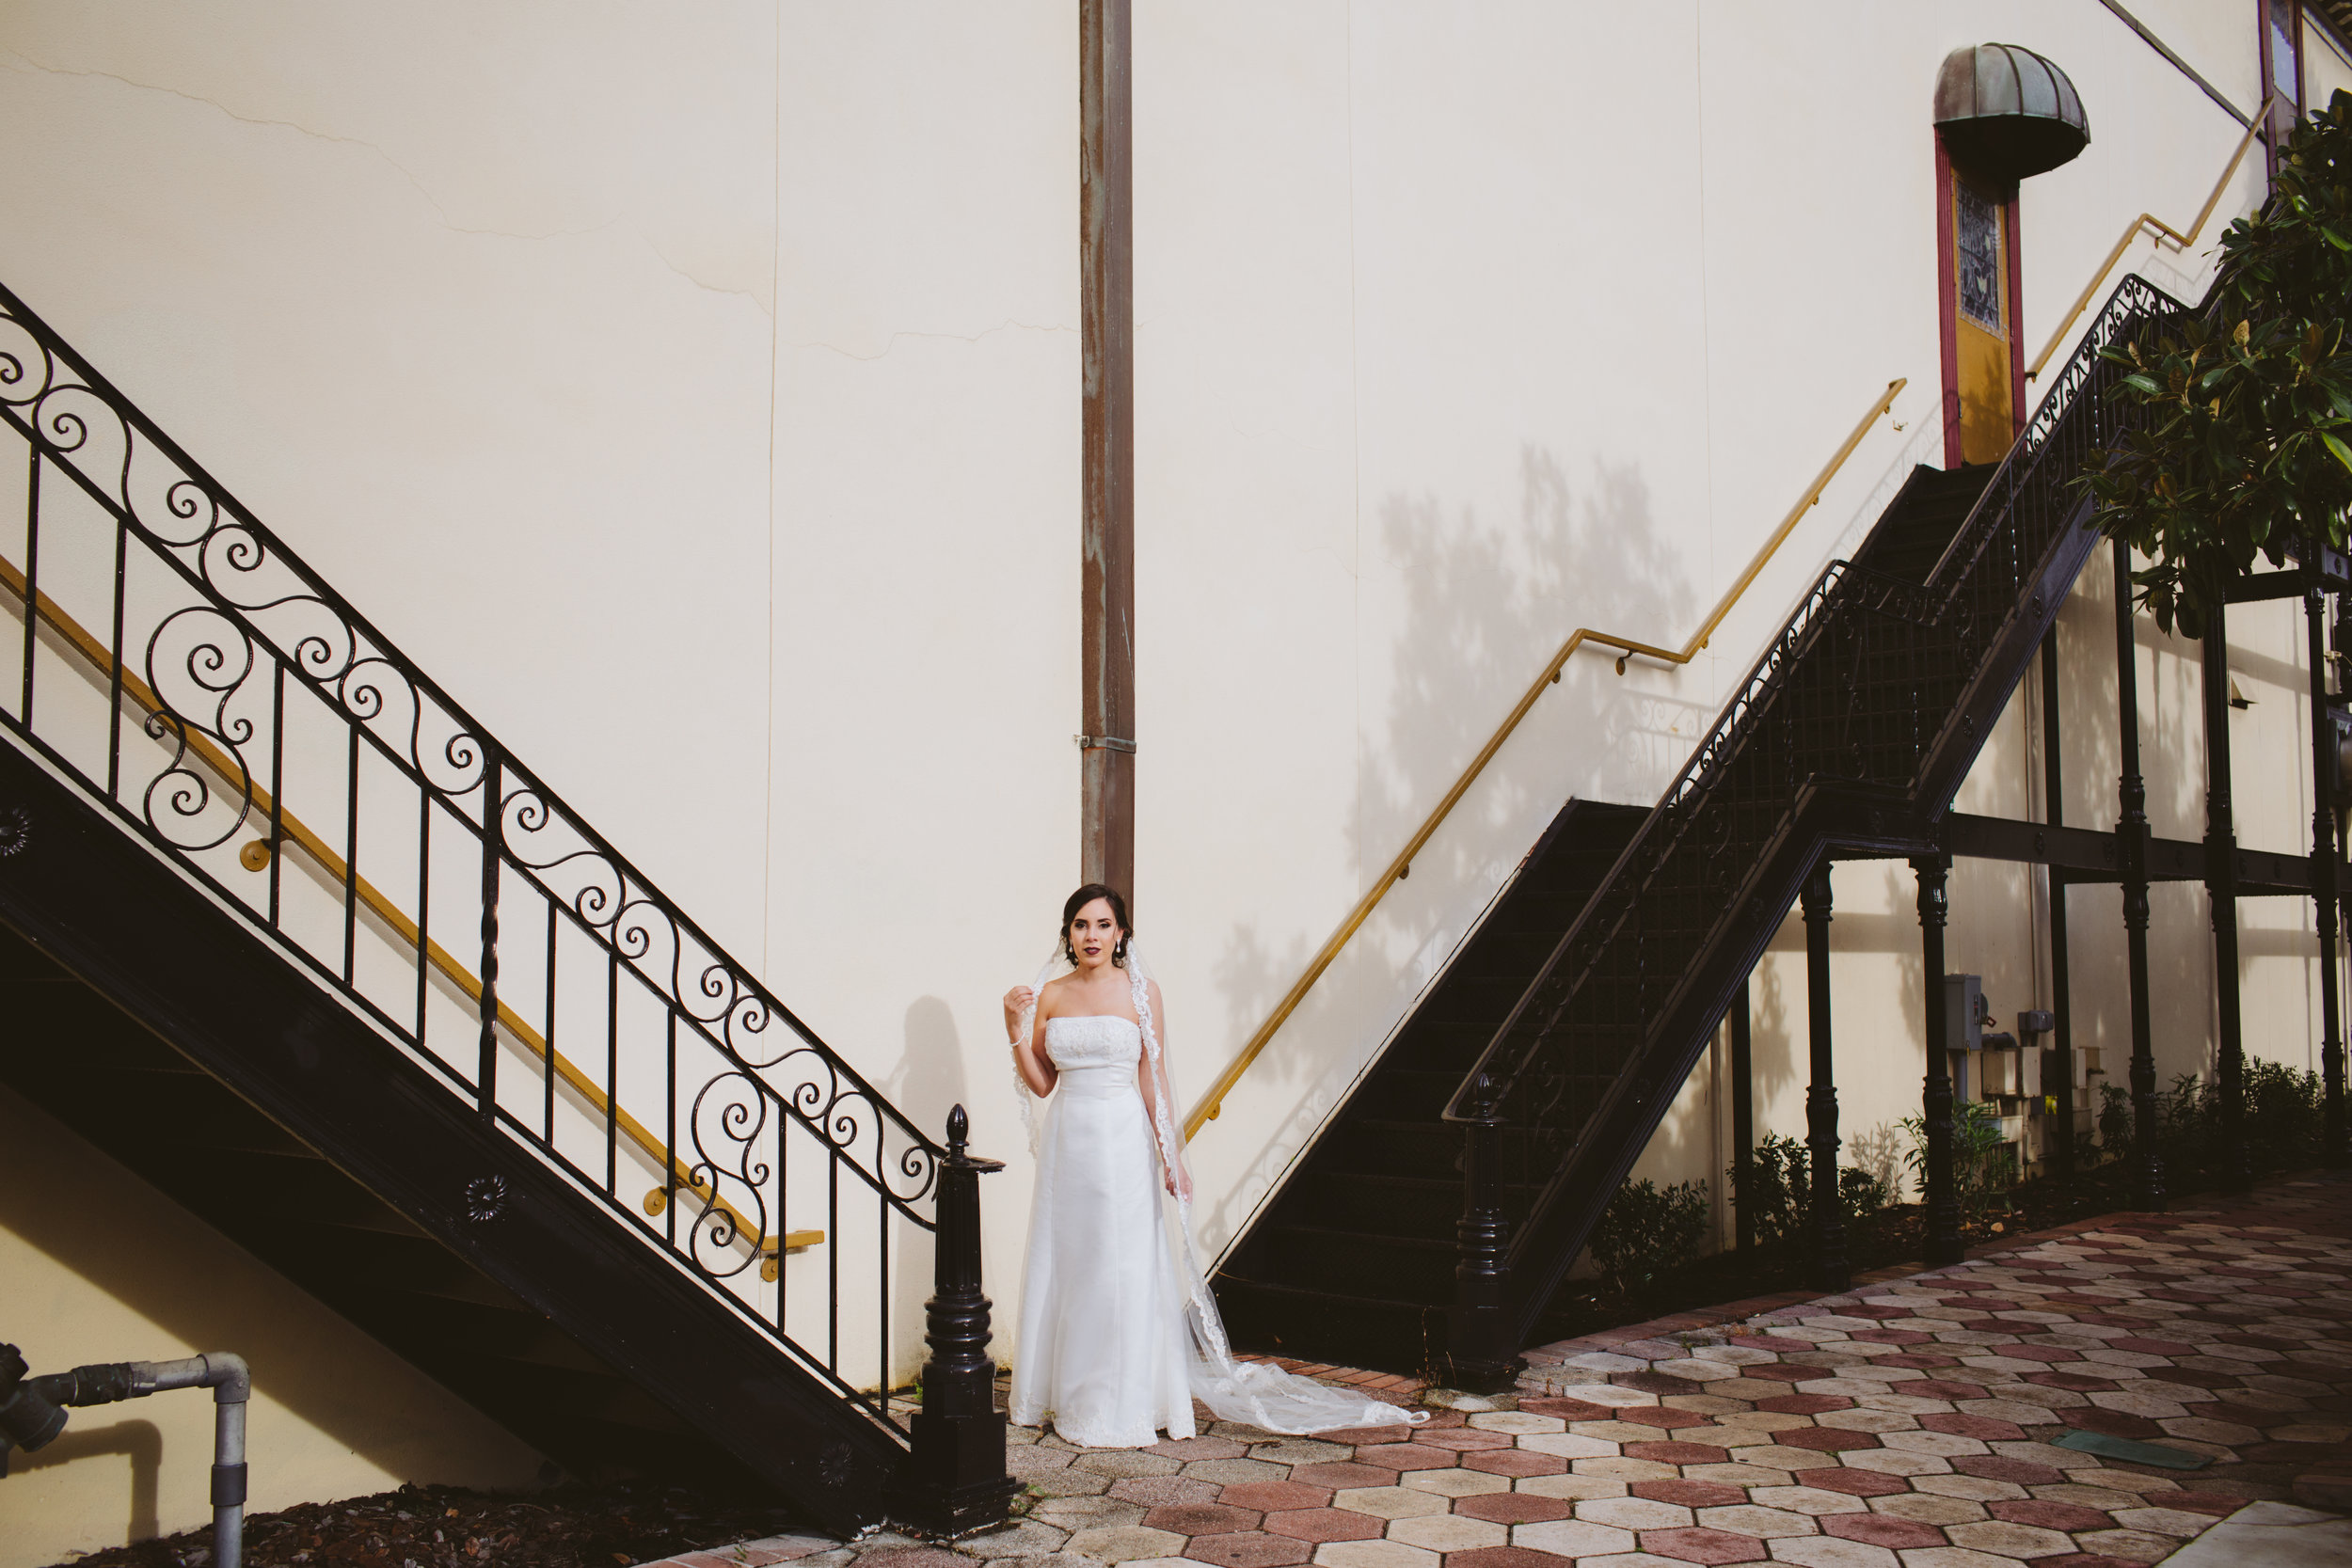 Ceviche Orlando | Wedding Photography | Vanessa Boy | vanessaboy.com |-263.com |final.jpg